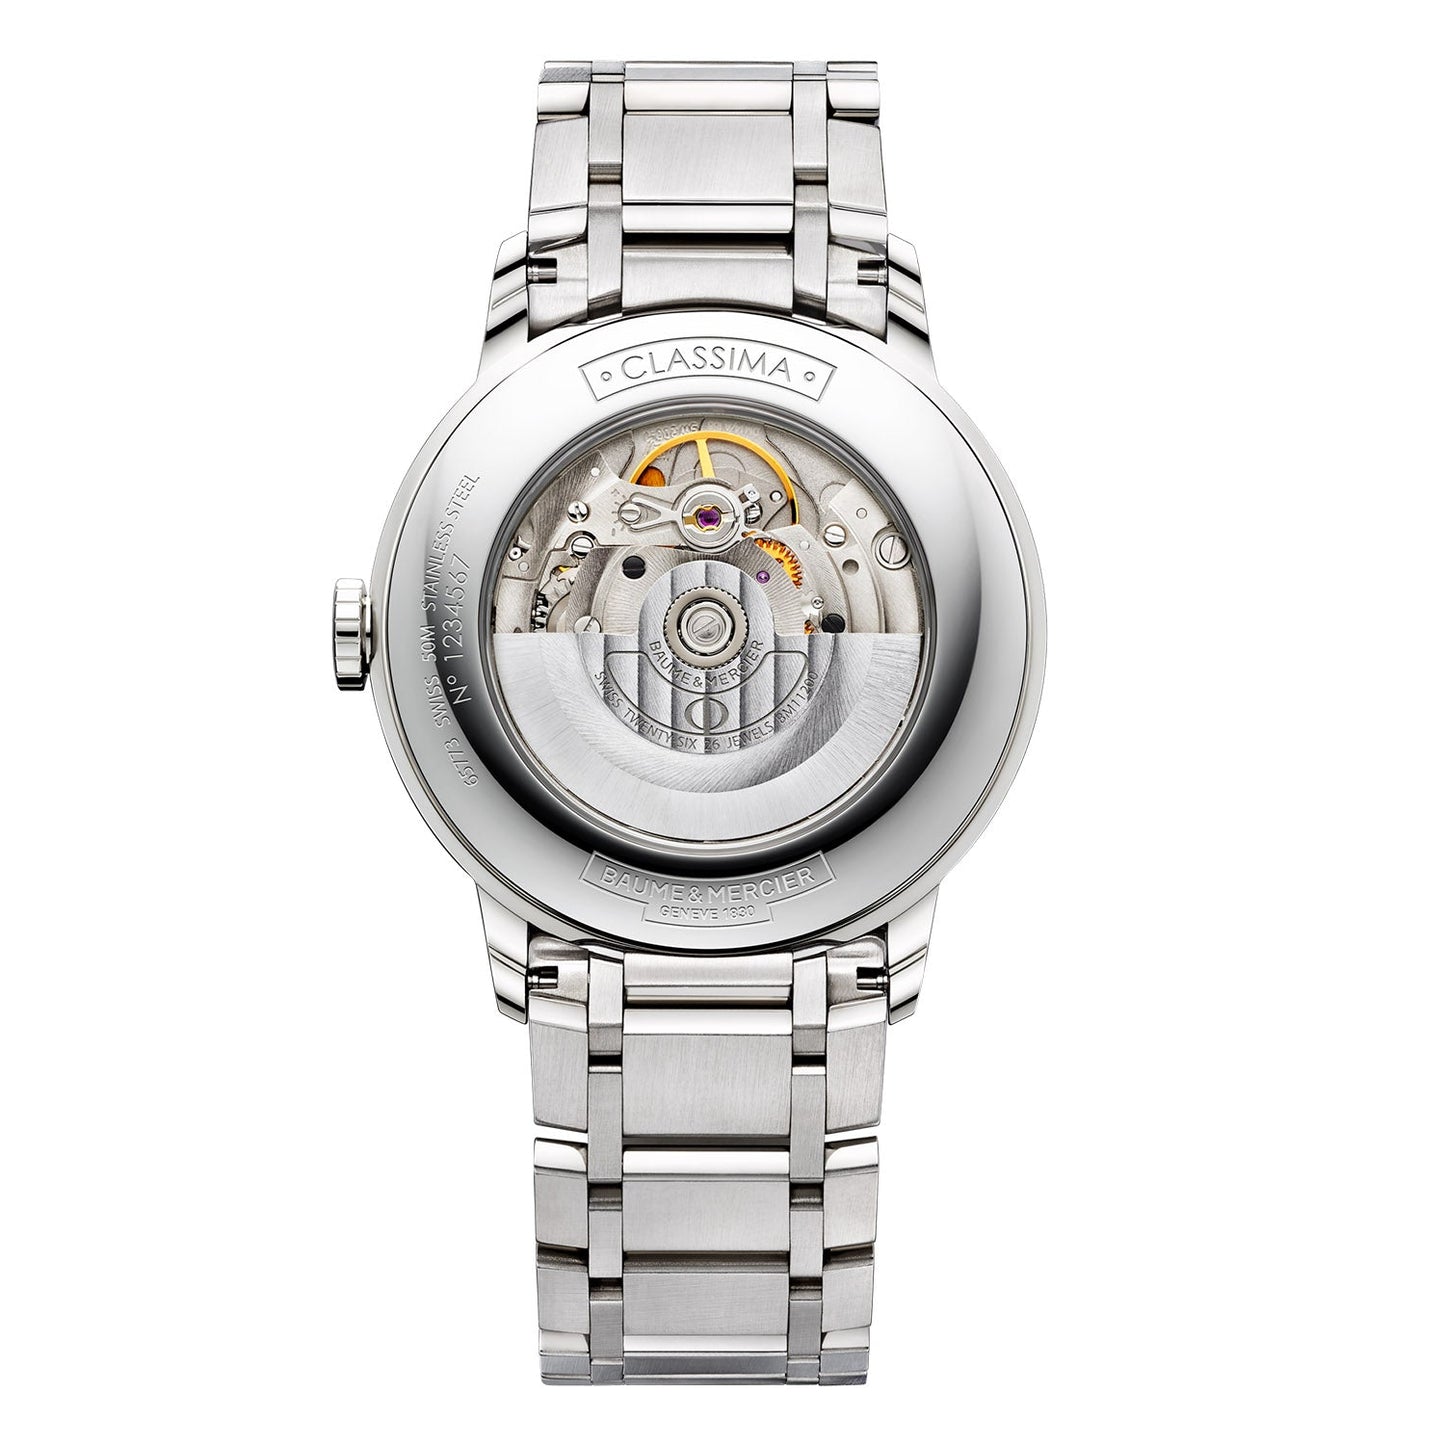 Baume & Mercier Classima Automatic, Date Display Men's Watch 40mm